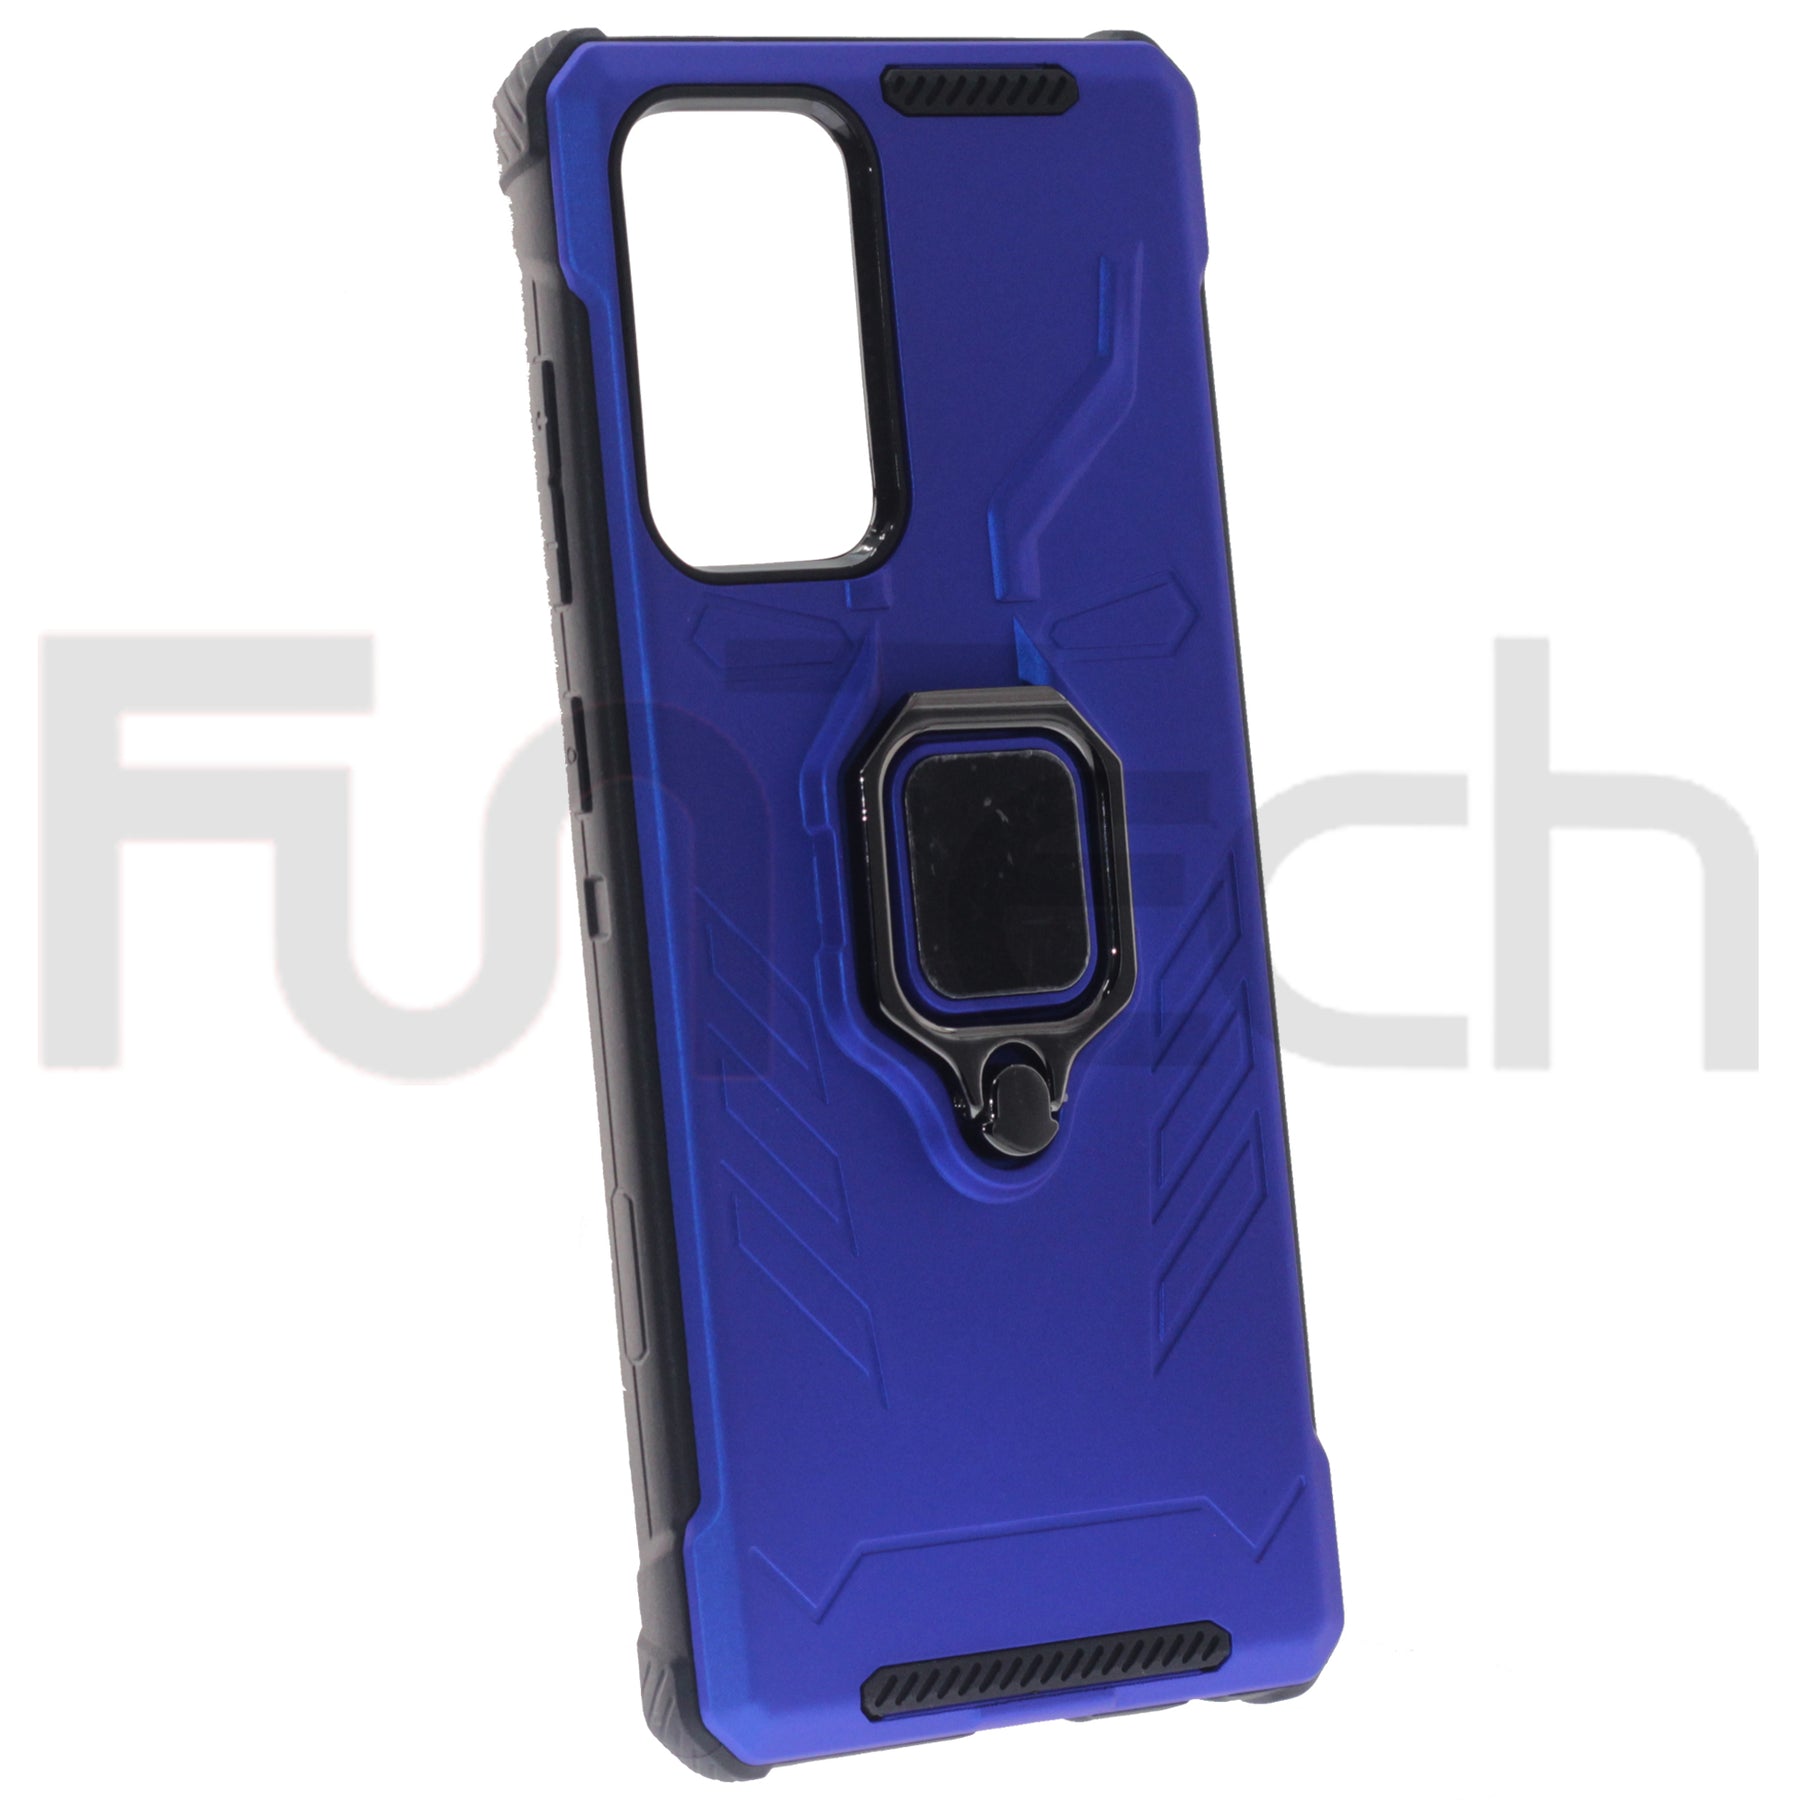 Samsung A52, Armor Case, Color Blue.